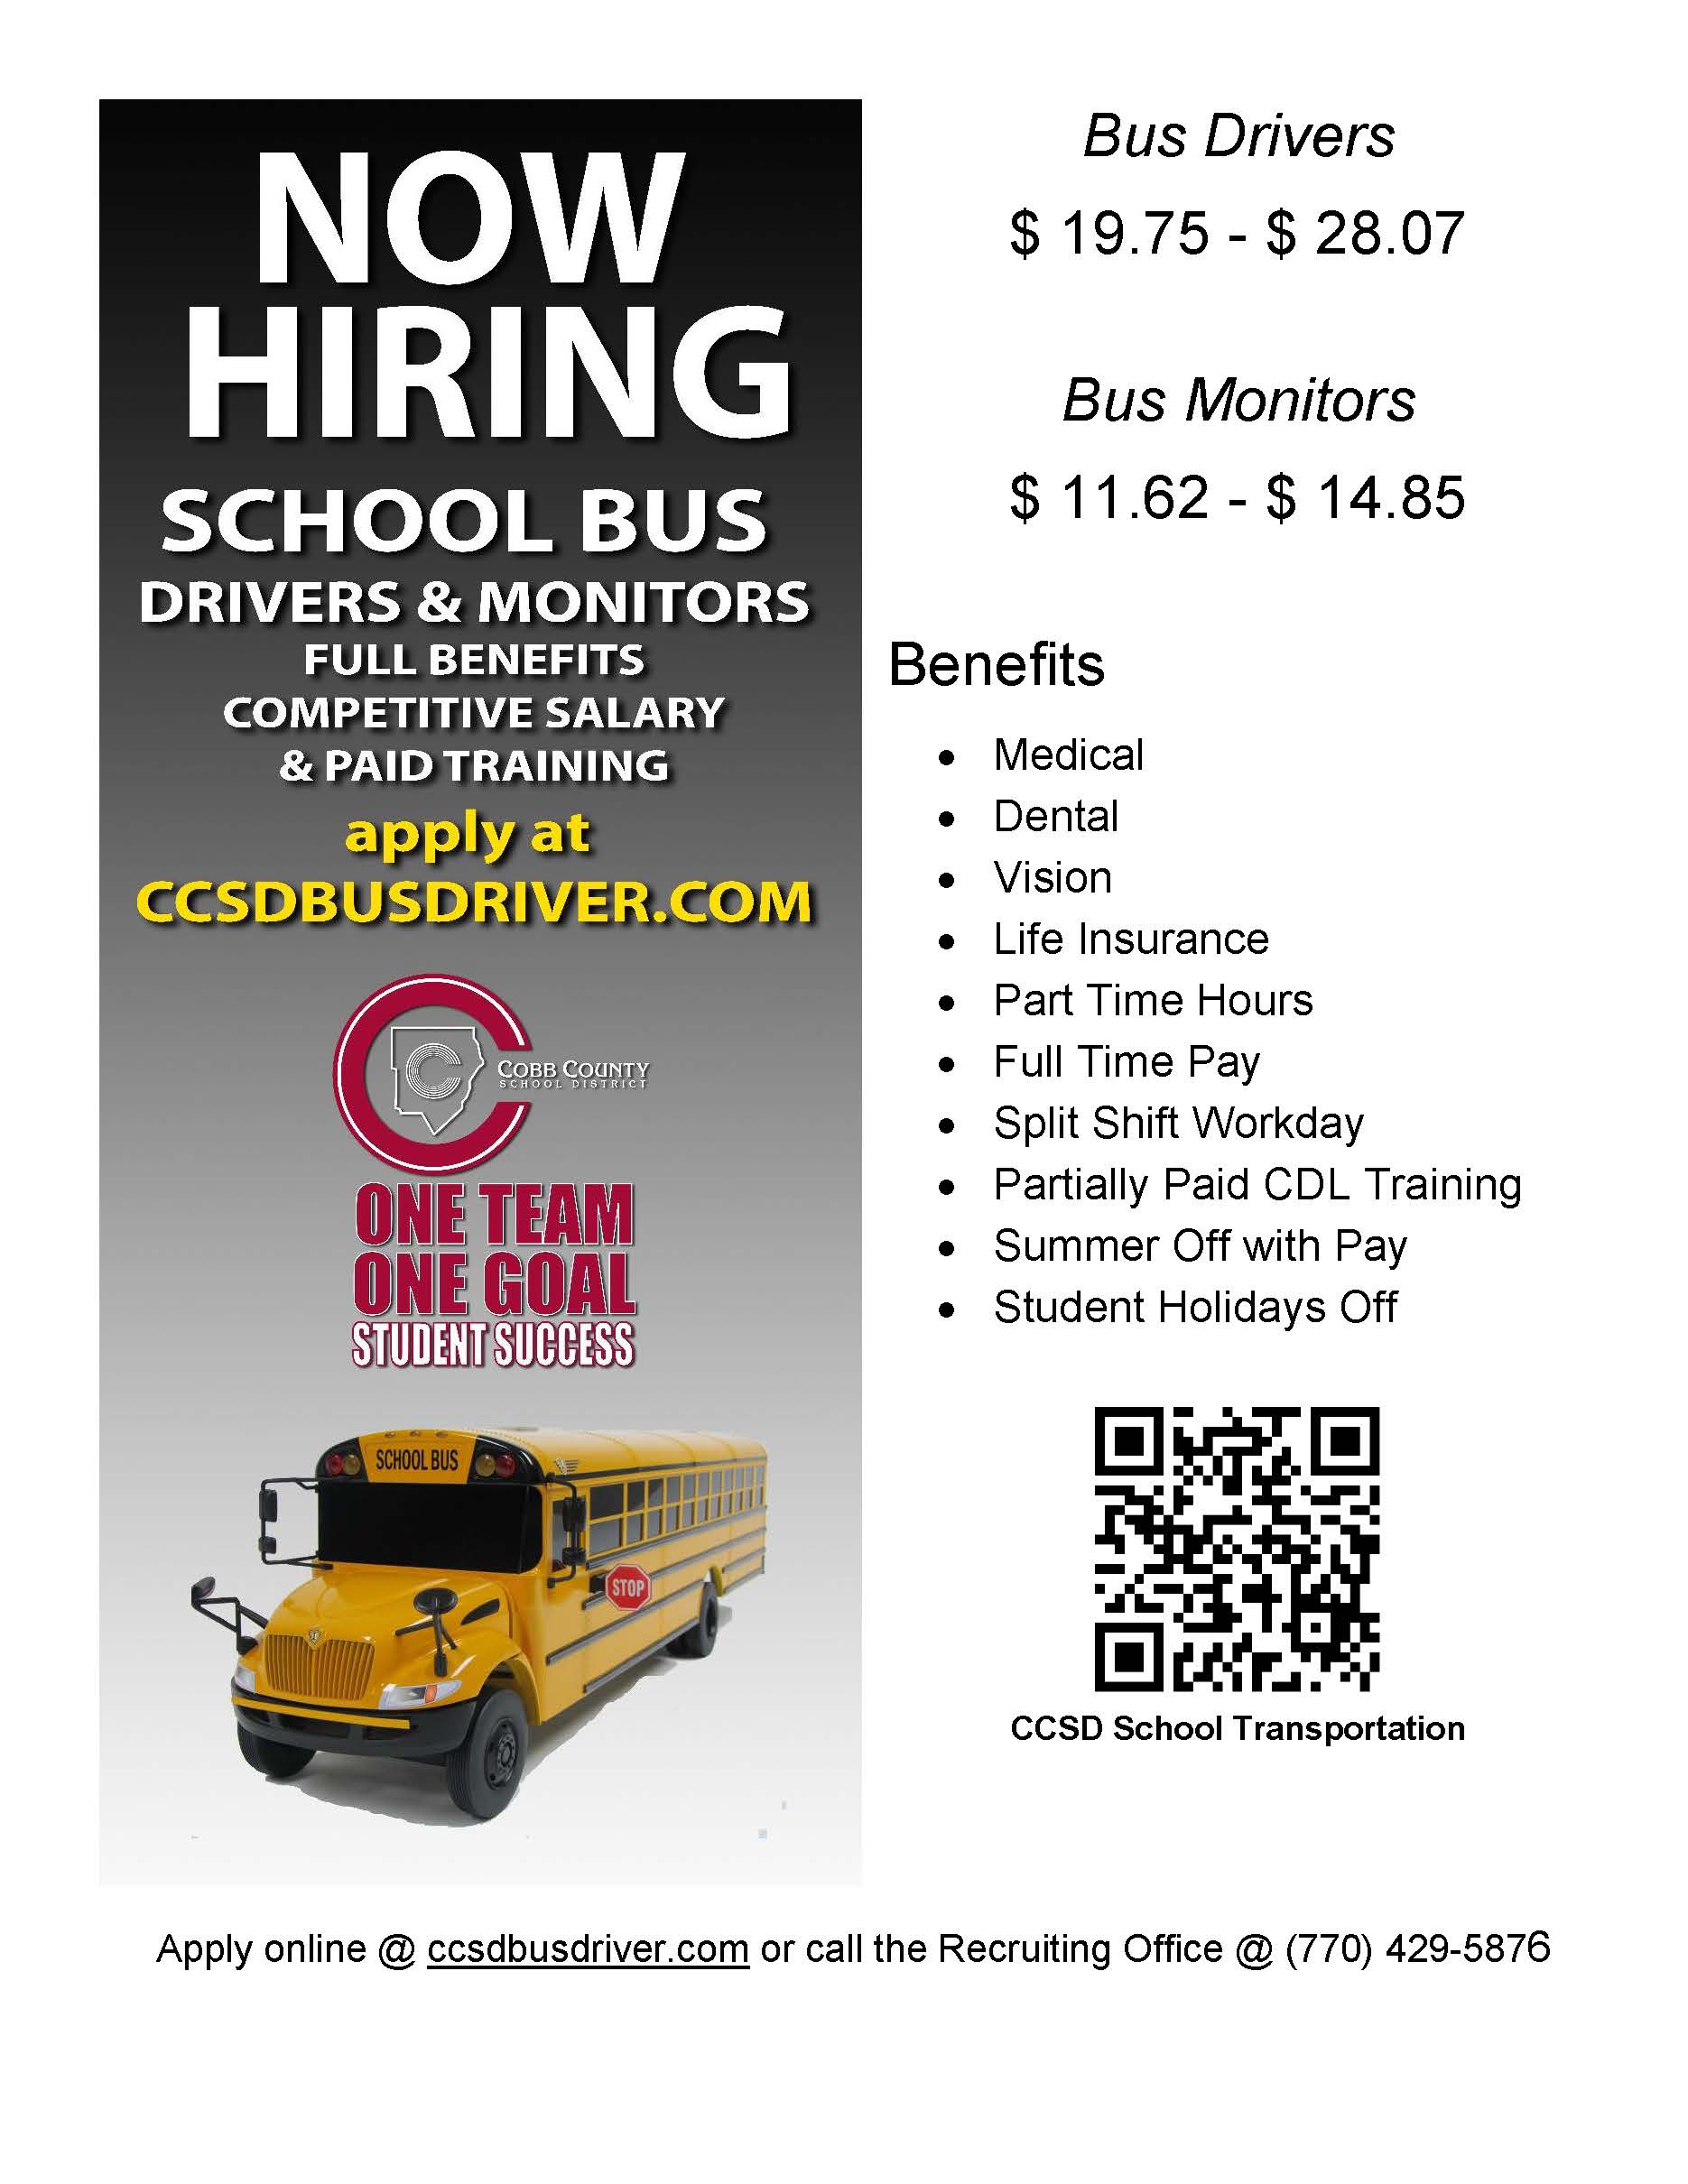 bus monitor jobs